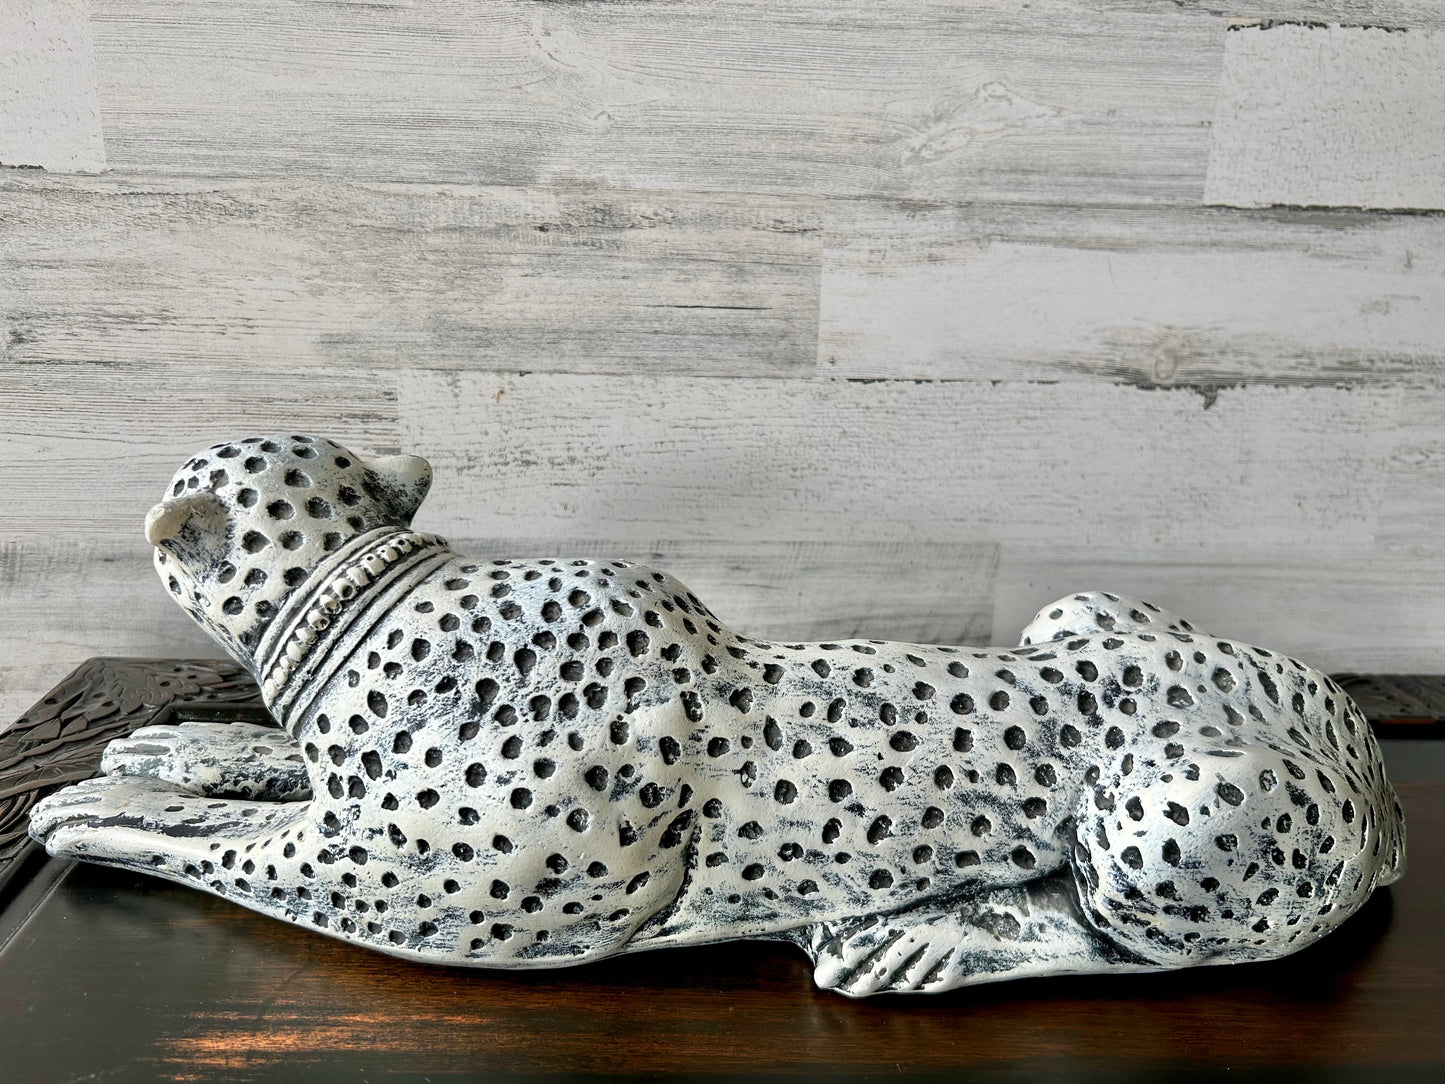 Vintage Ceramic Cheetah